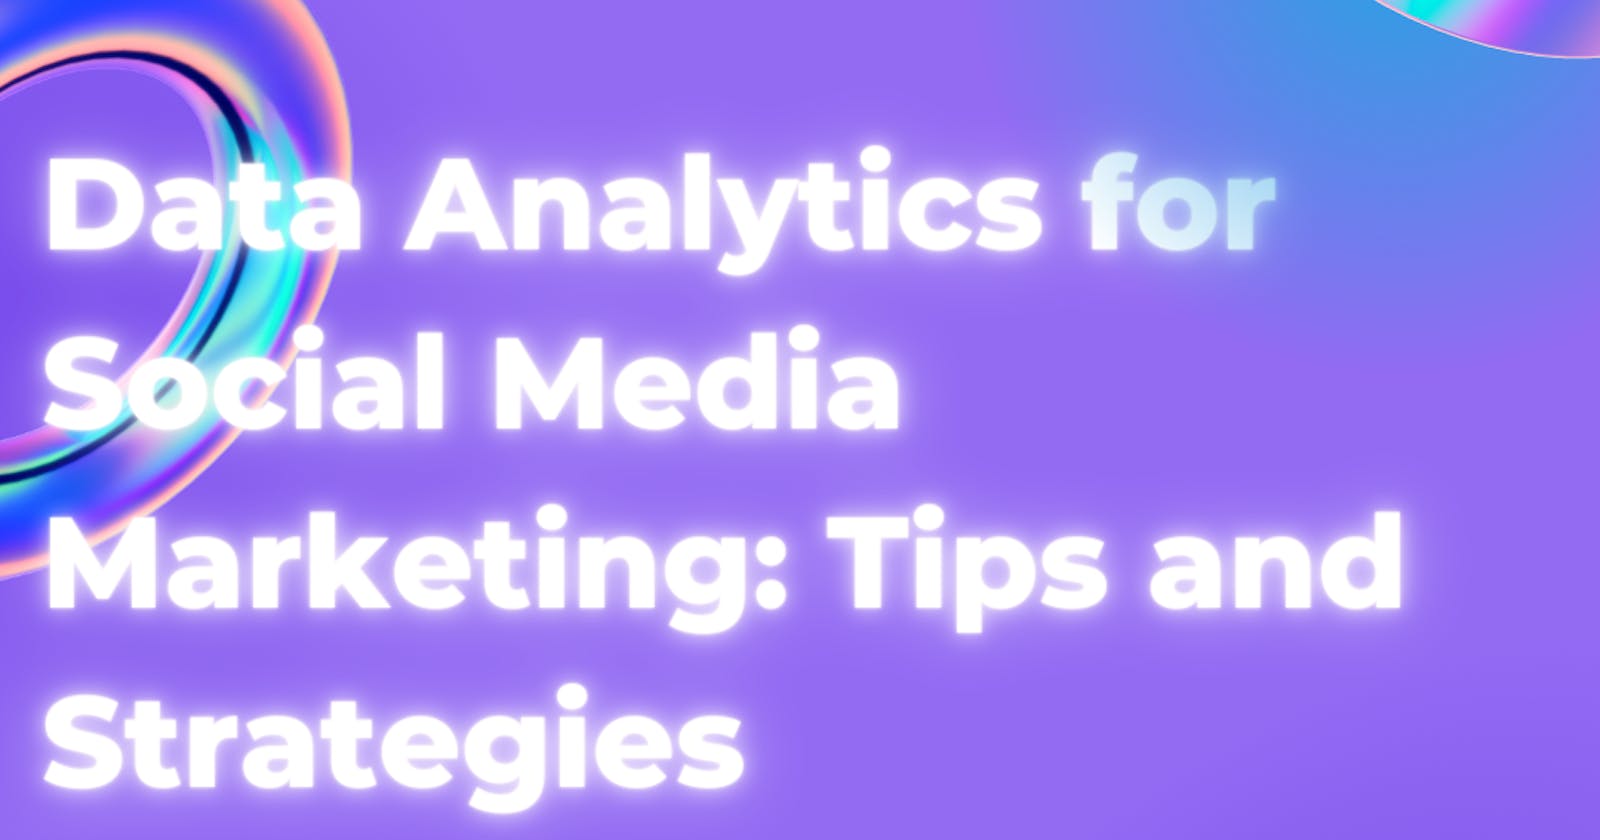 Data Analytics for Social Media Marketing: Tips and Strategies